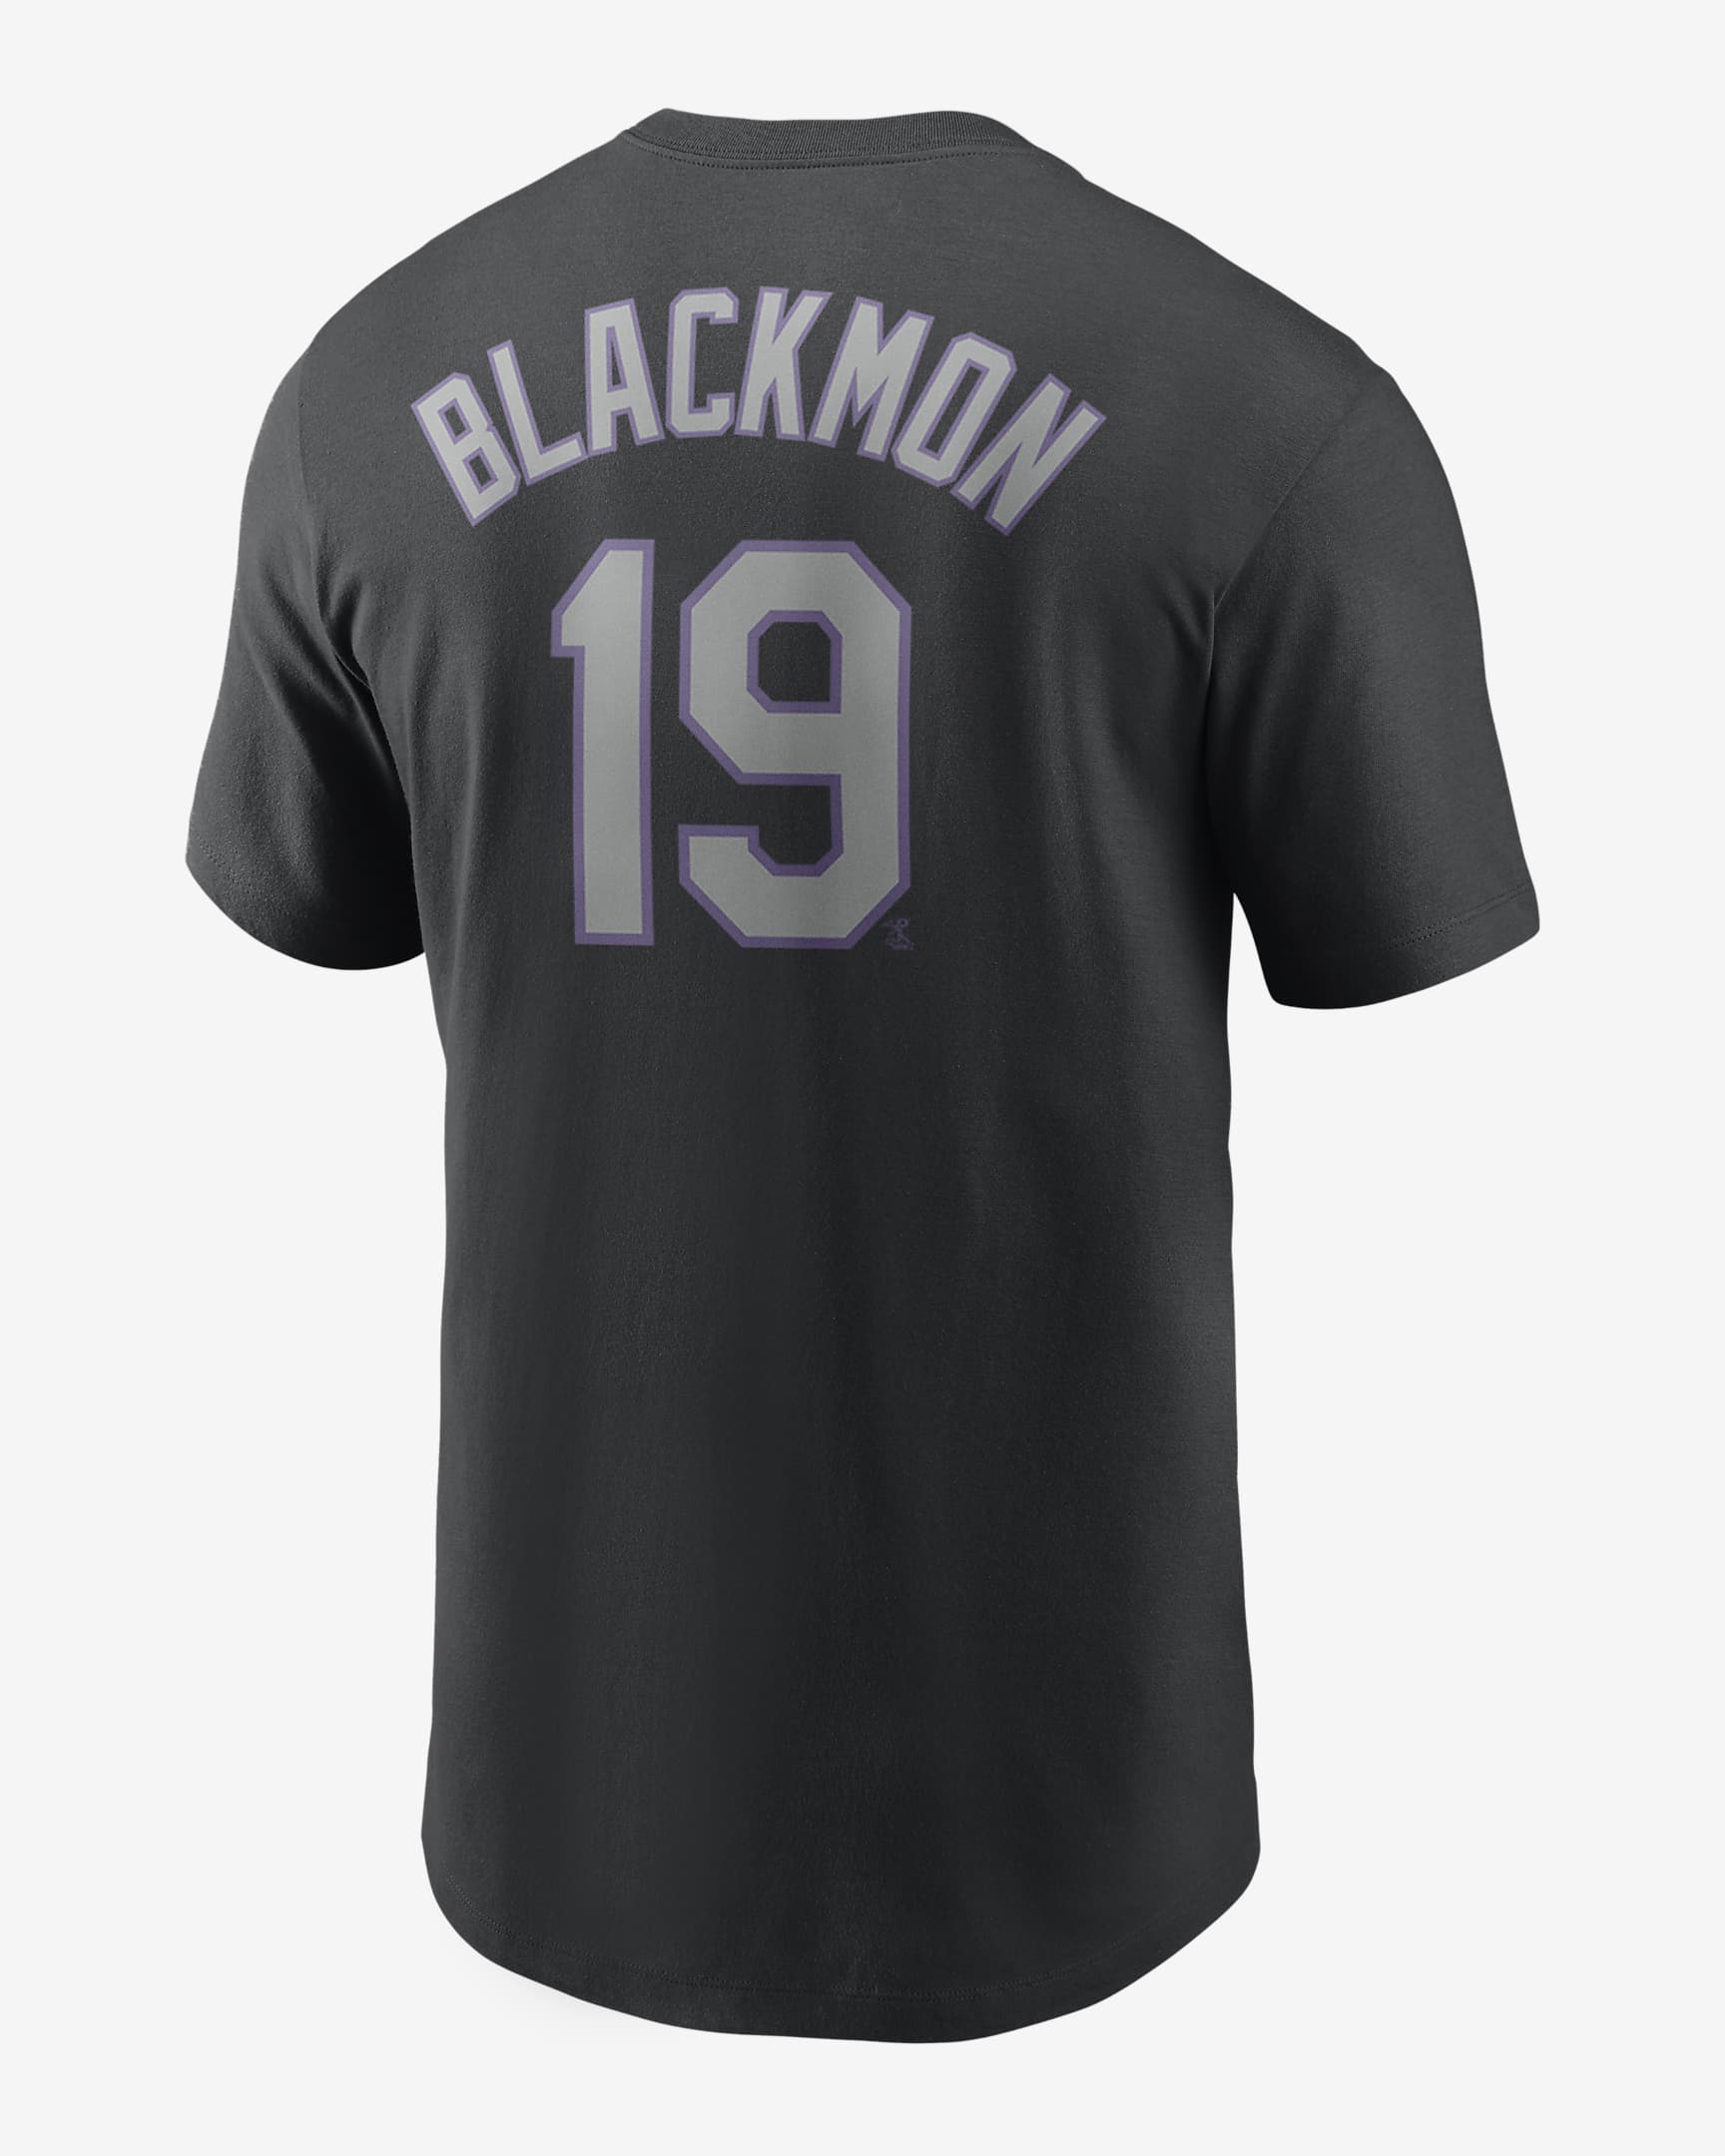 Playera para hombre MLB Colorado Rockies (Charlie Blackmon). Nike.com